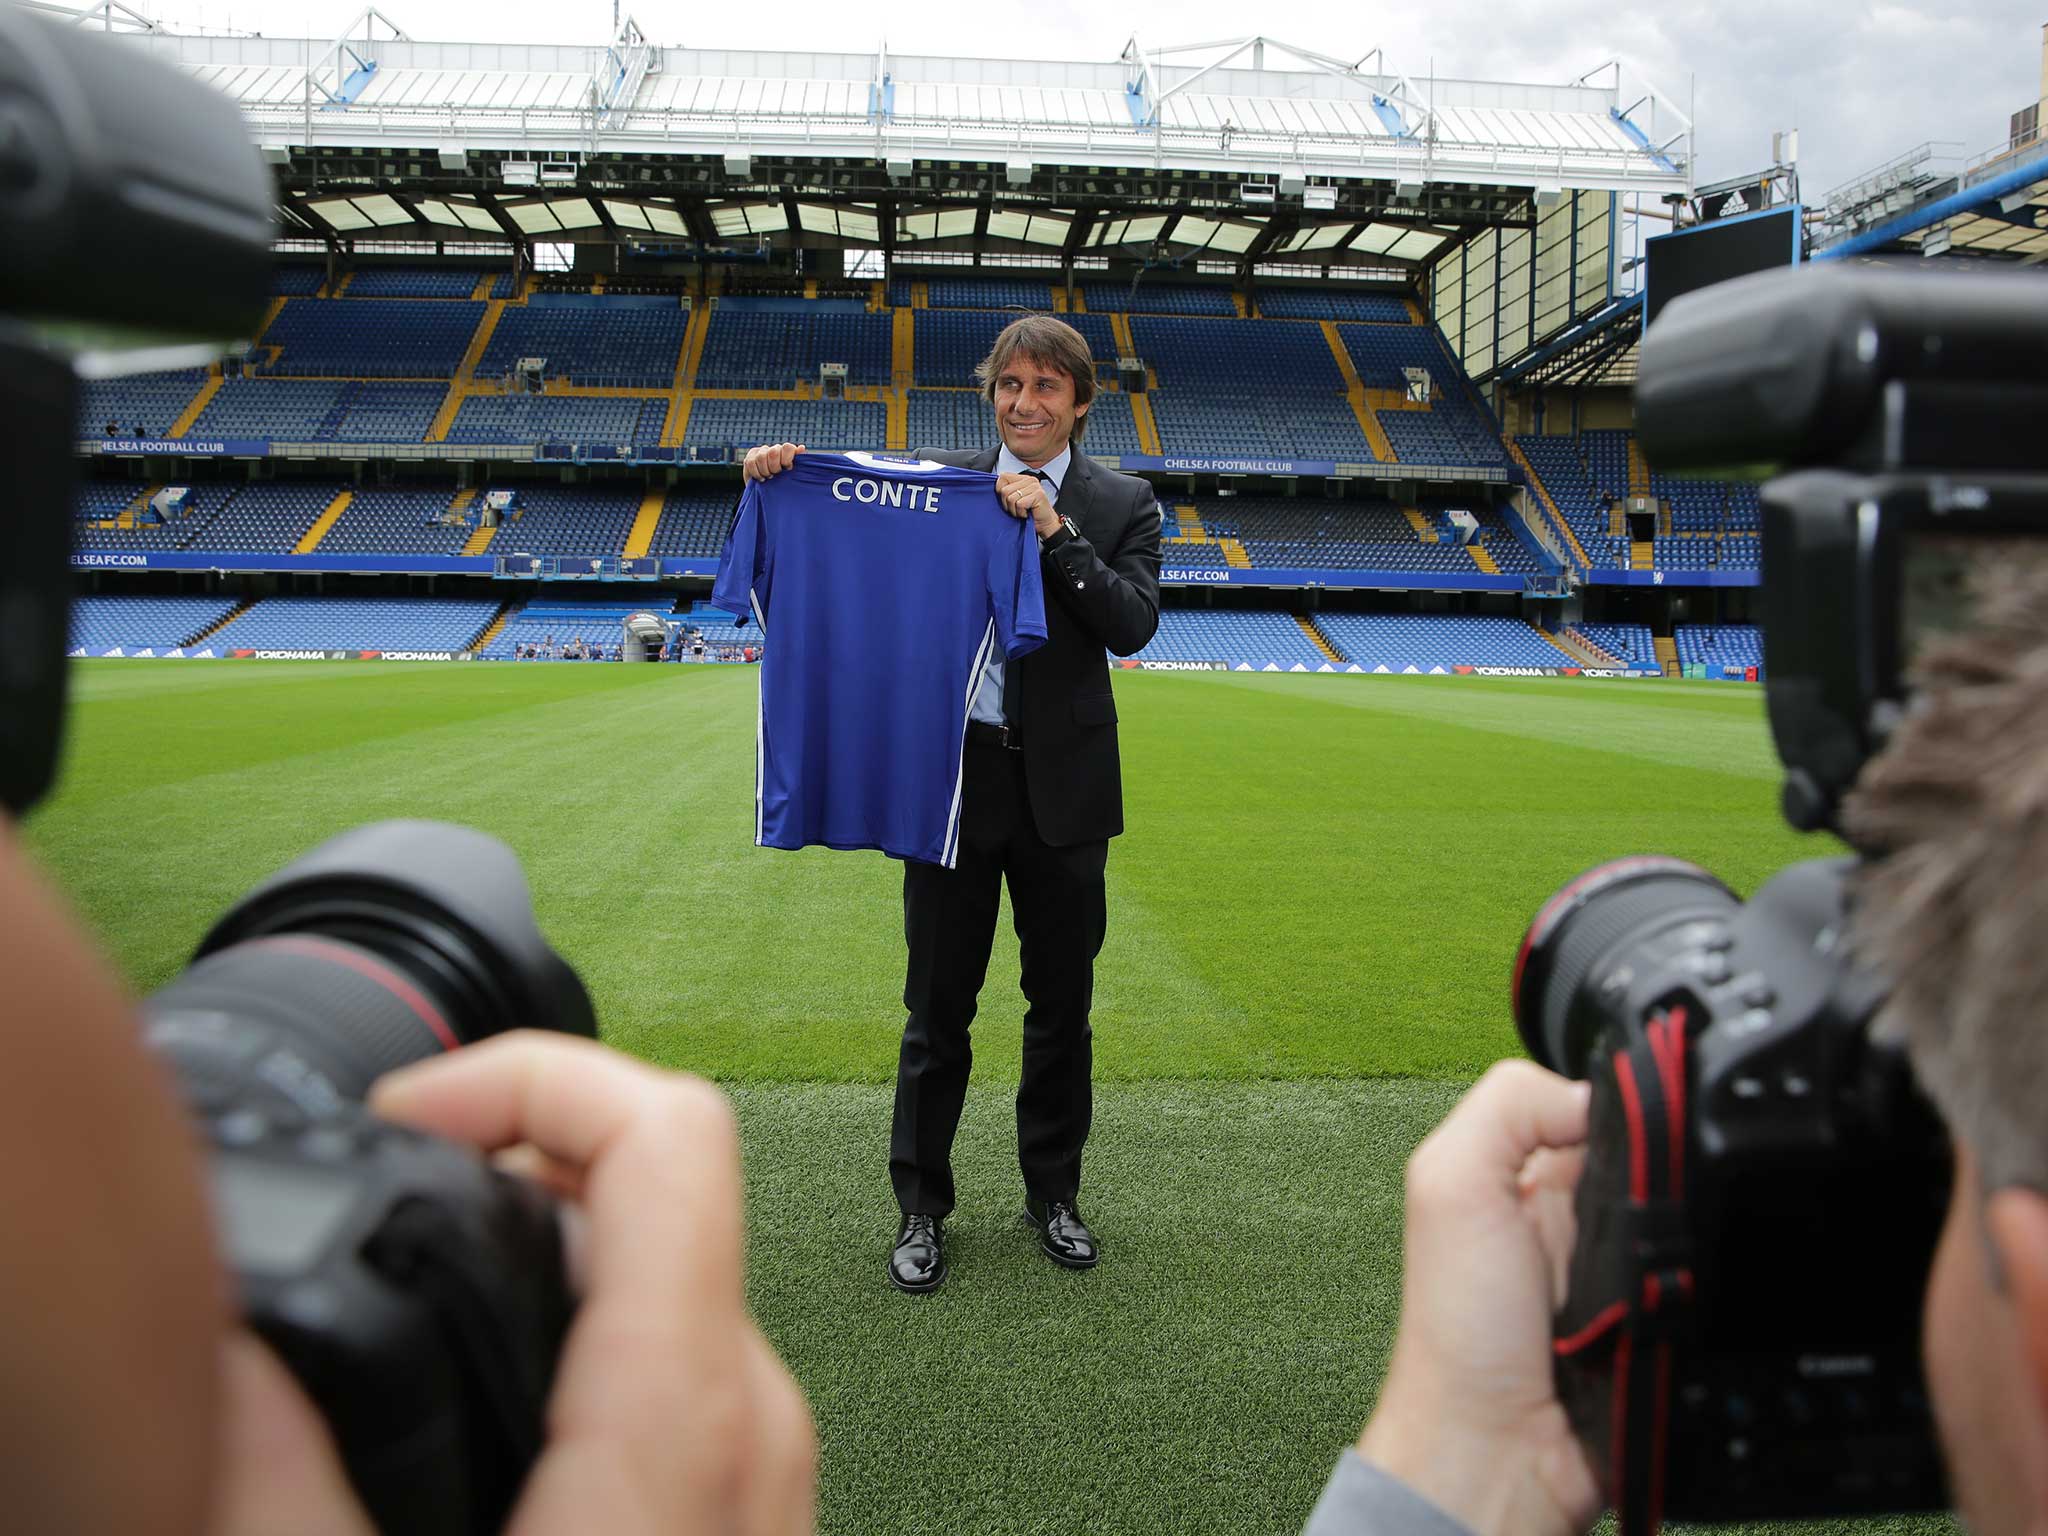 Antonio Conte poses for photographers at Stamford Bridge